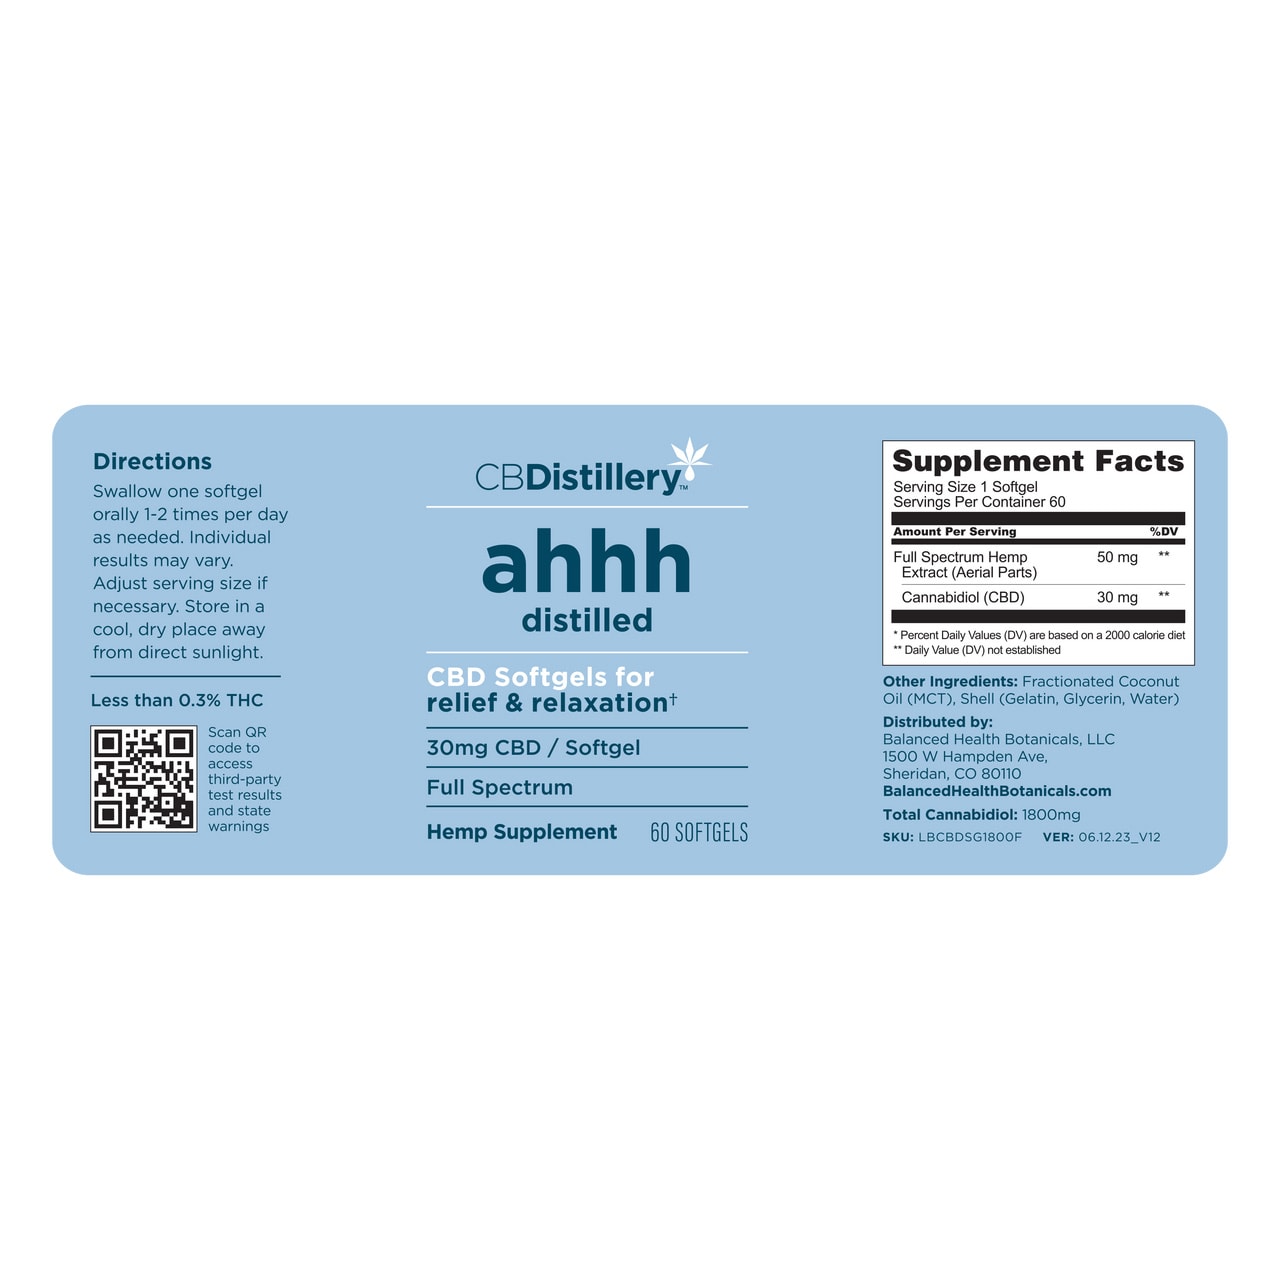 CBDistillery, Ahhh Distilled CBD Softgels For Relief & Relaxation, Full Spectrum, 60ct, 1800mg CBD